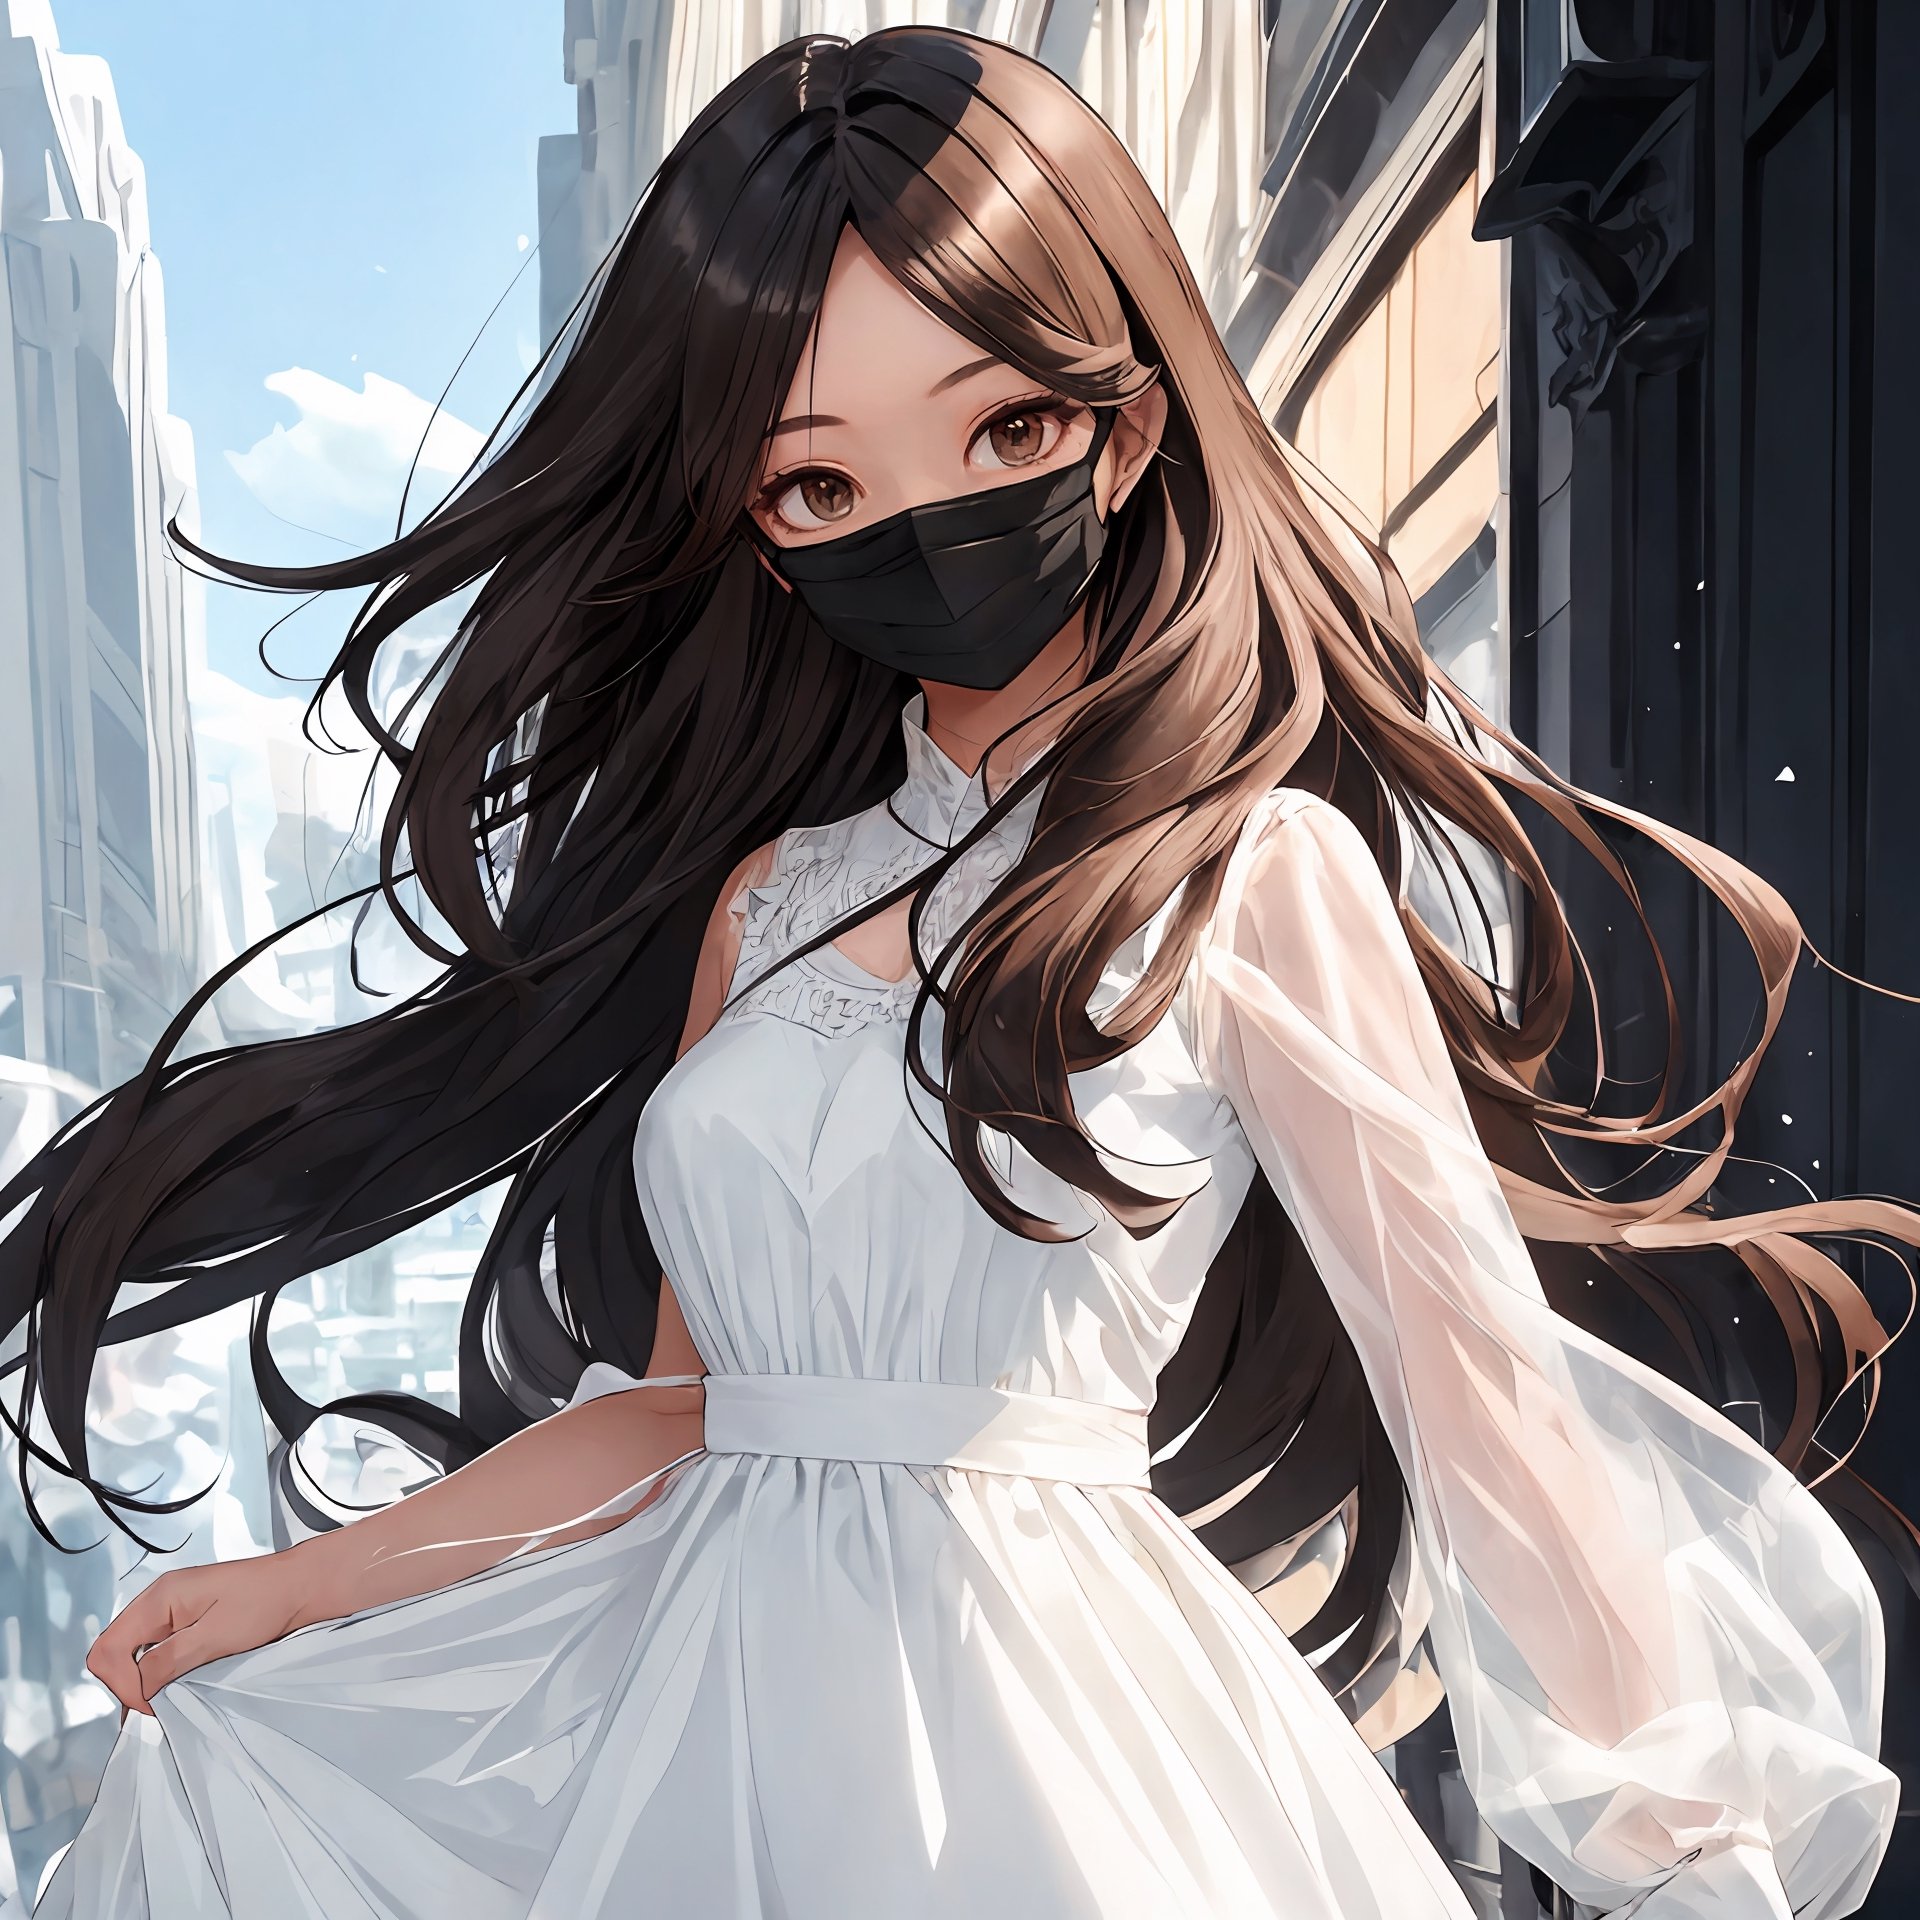 black mask,
beautiful girl
happy, clear
white dress,
longhair ,
brown hair